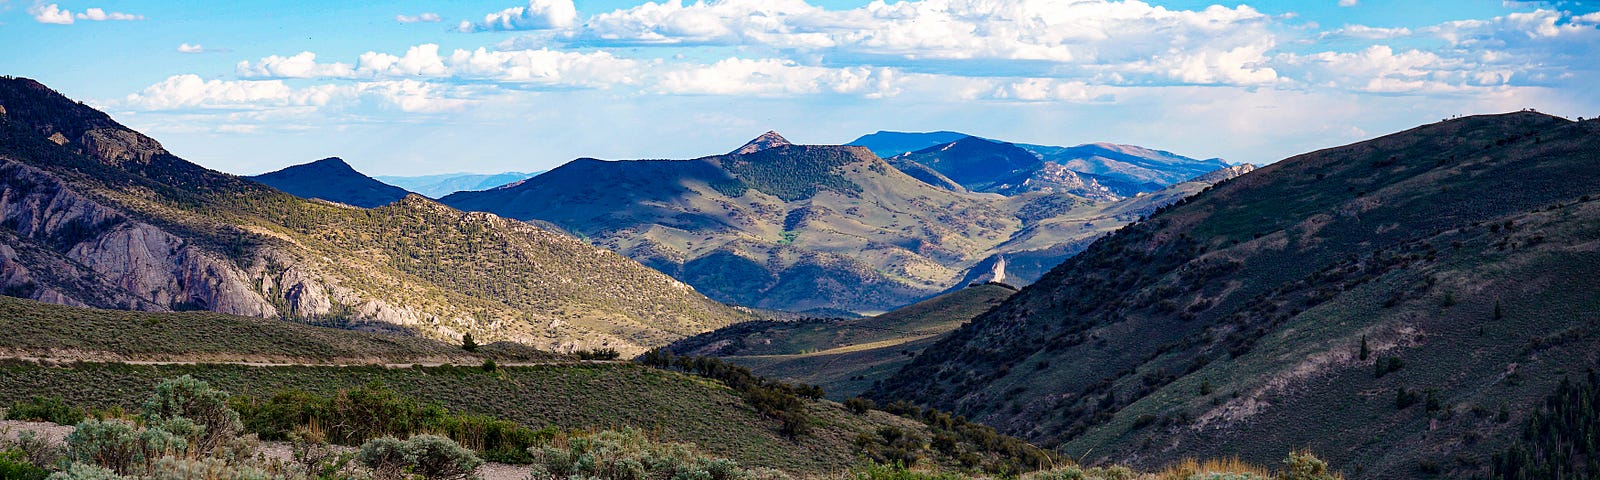 Over looking the mountainous terrain of beautiful Nevada